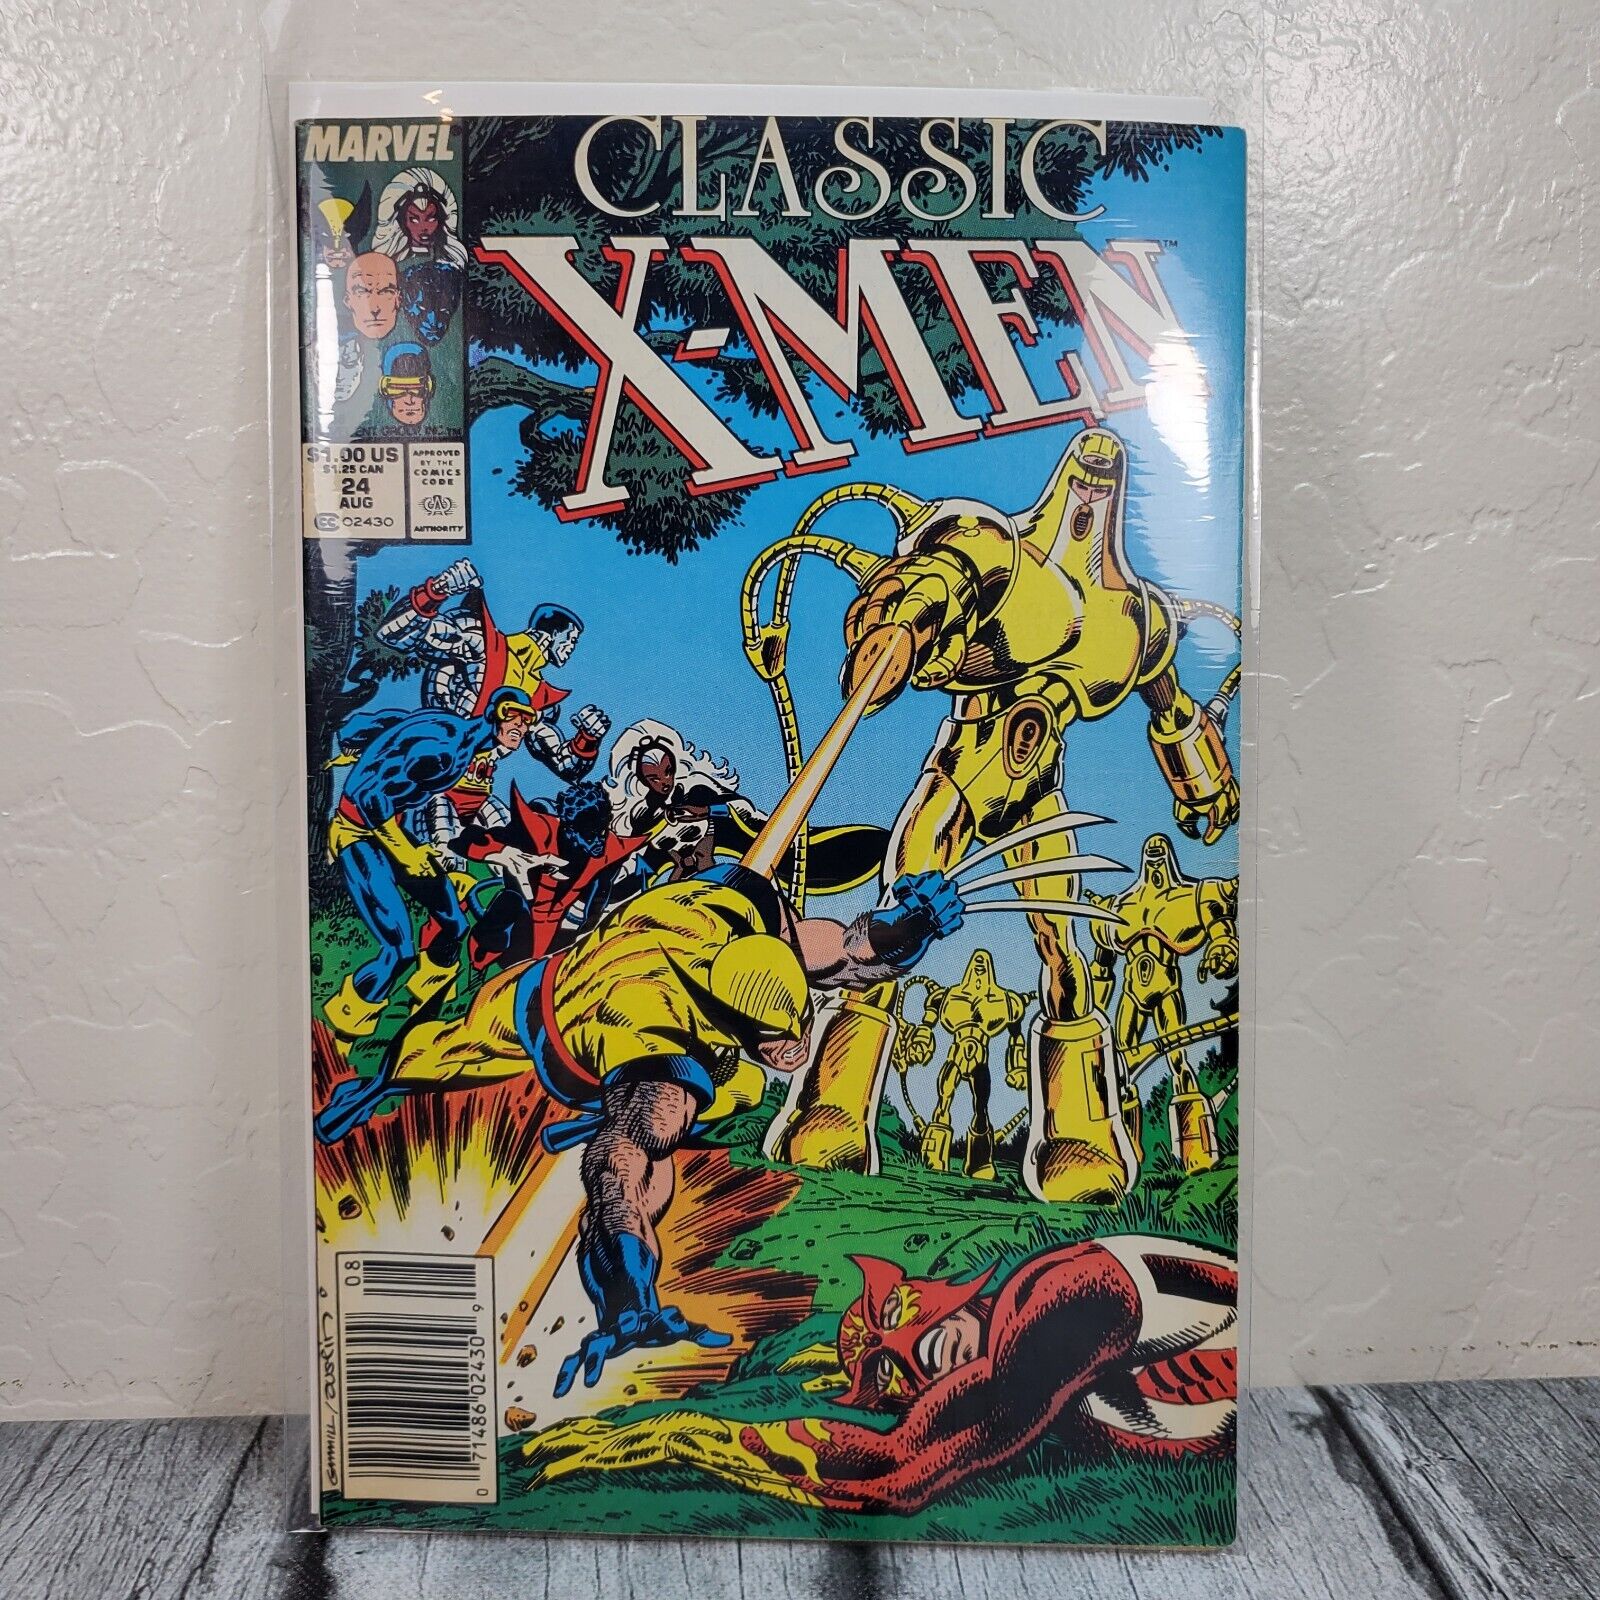 Marvel Comics Classic X-Men #24 Volume 1 Aug 1988 Sentinel Vintage Comic Book